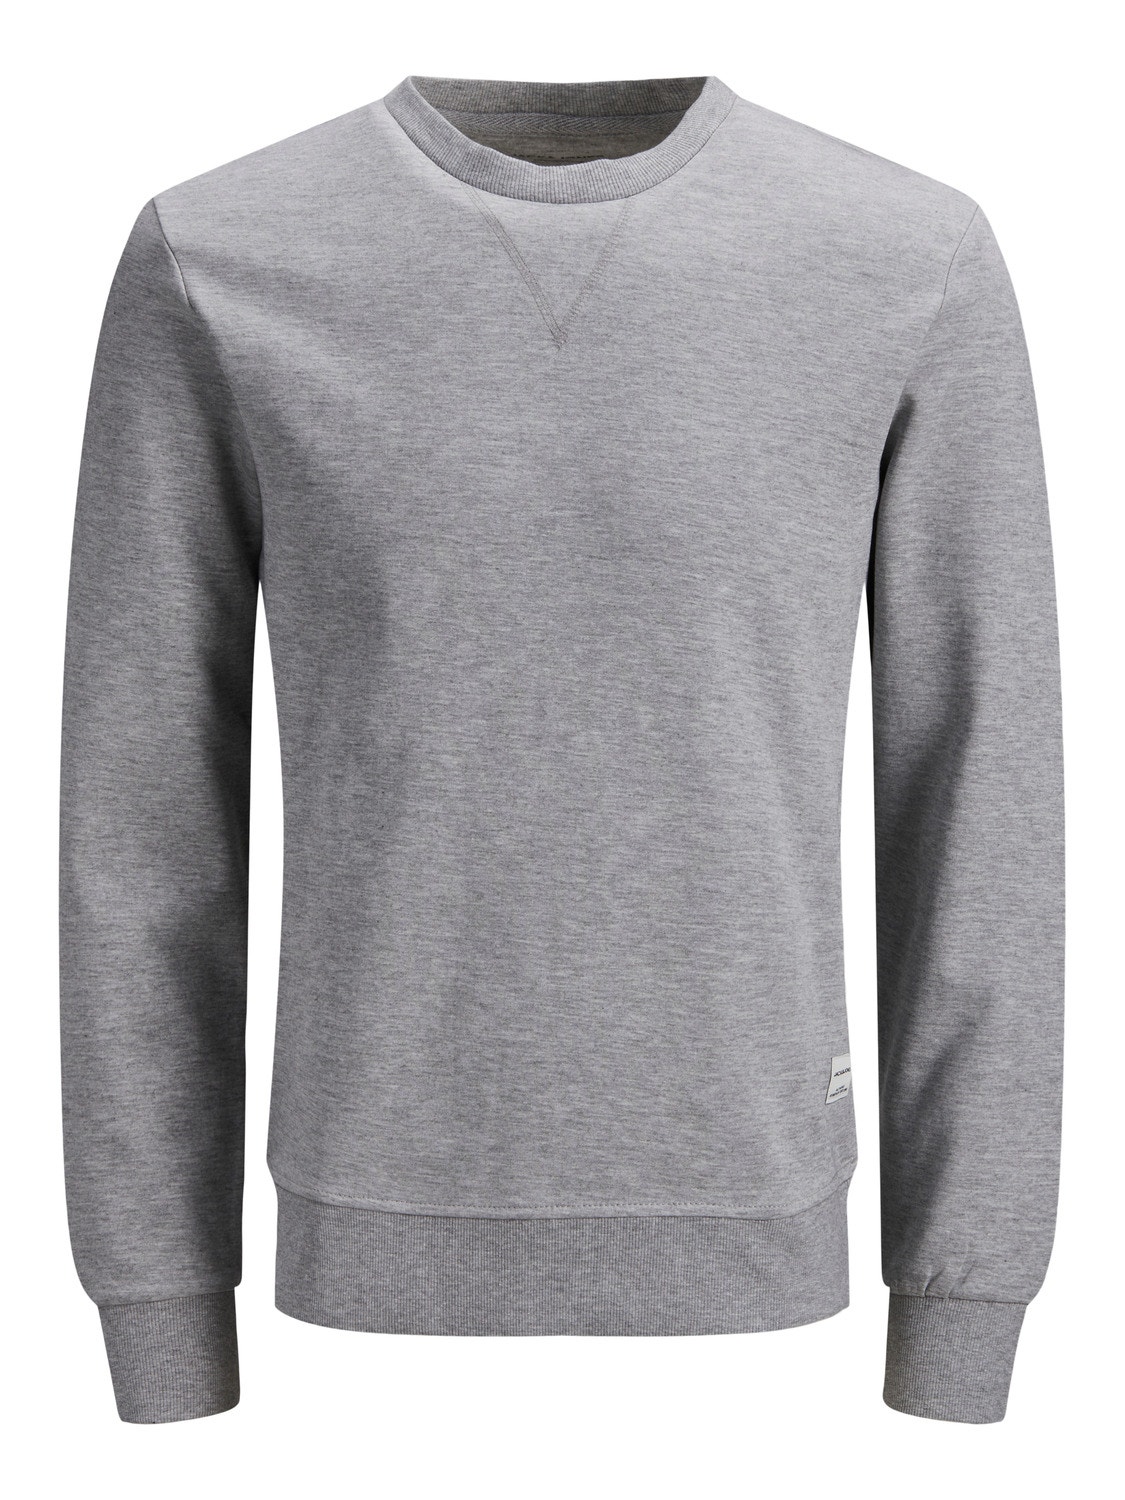 Jack & Jones Plus Size Plain Crewn Neck Sweatshirt -Light Grey Melange - 12182567